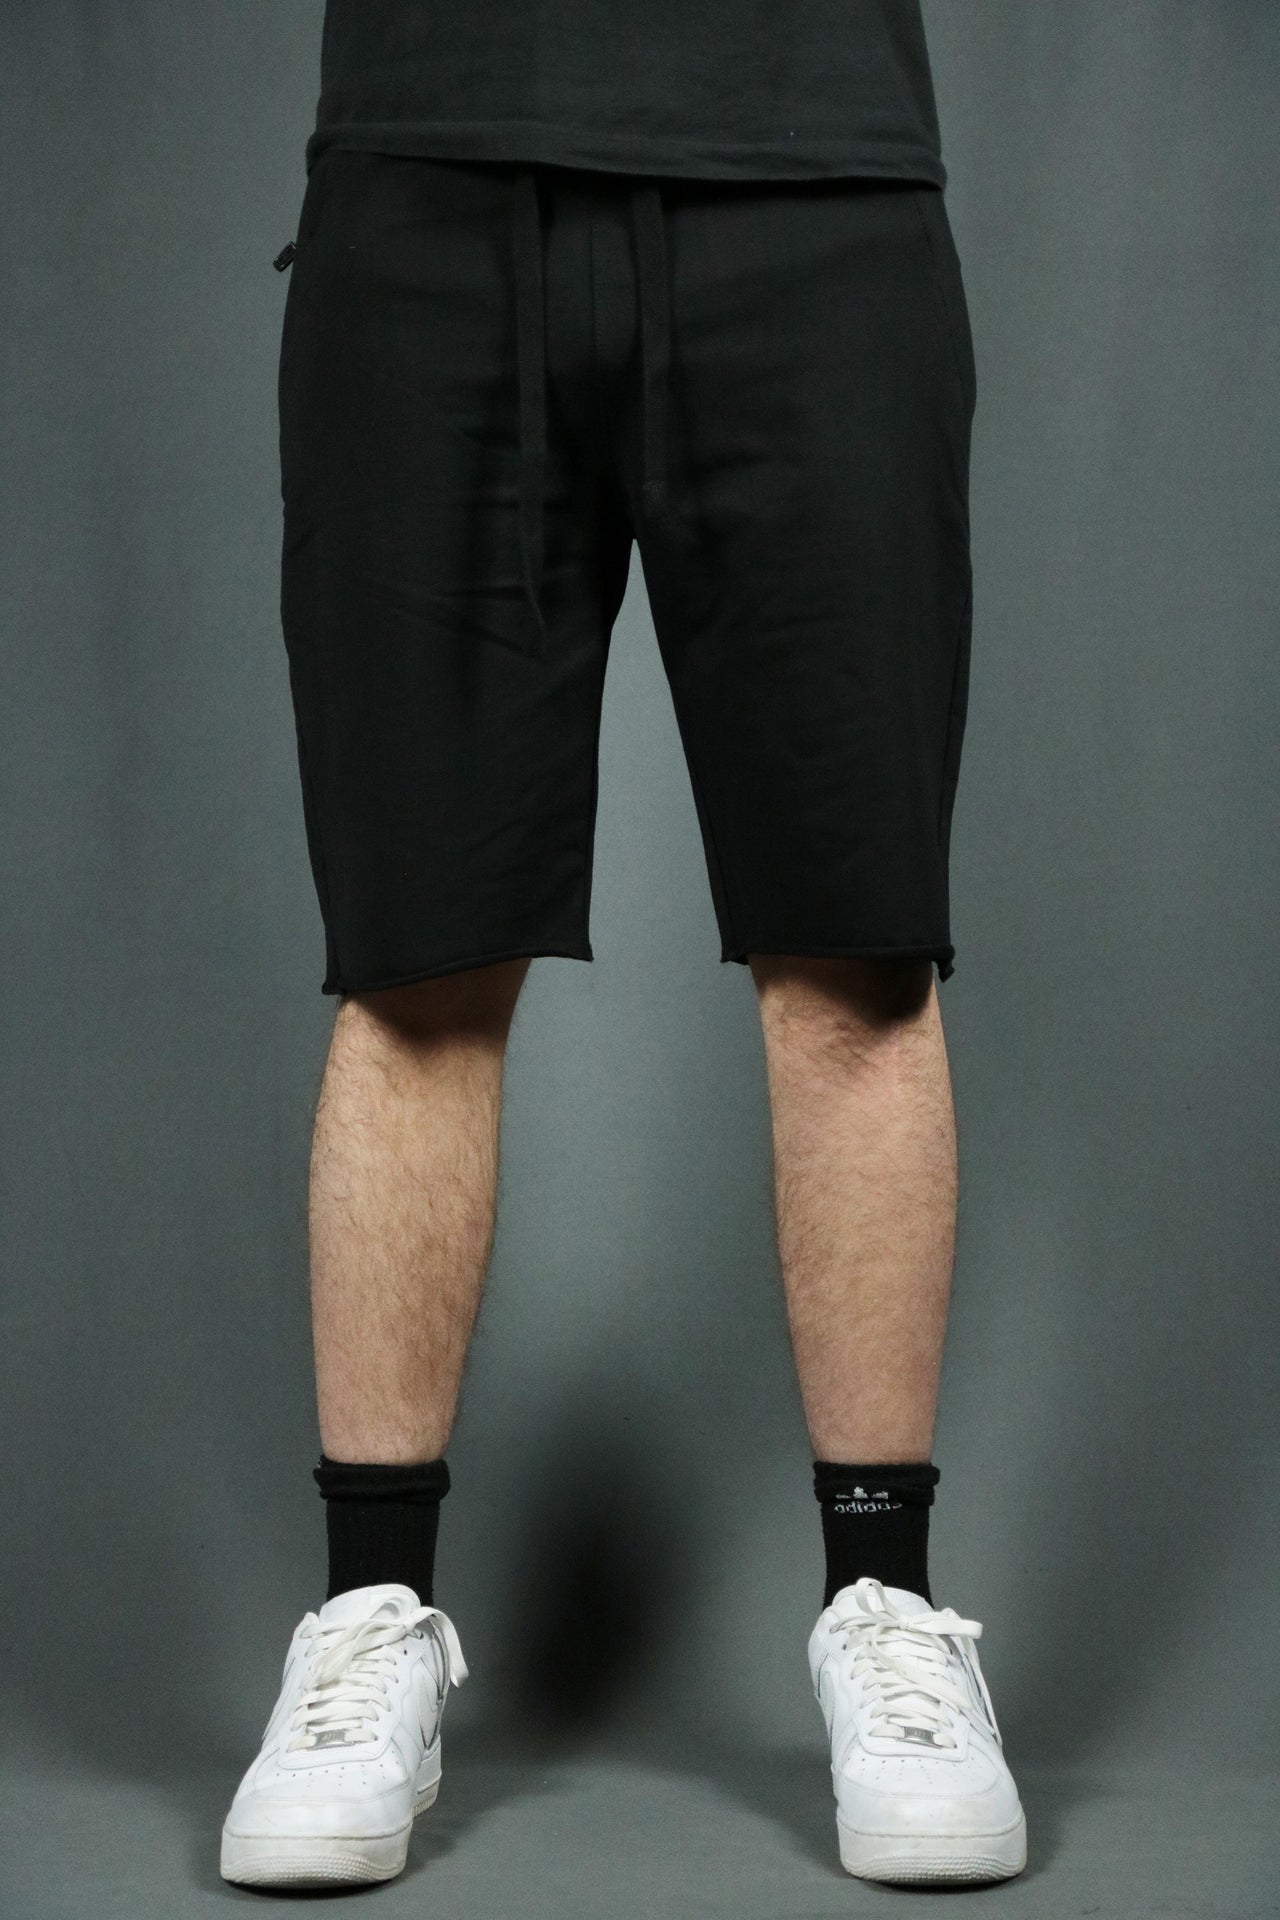 The black Jordan Craig men's terry shorts.